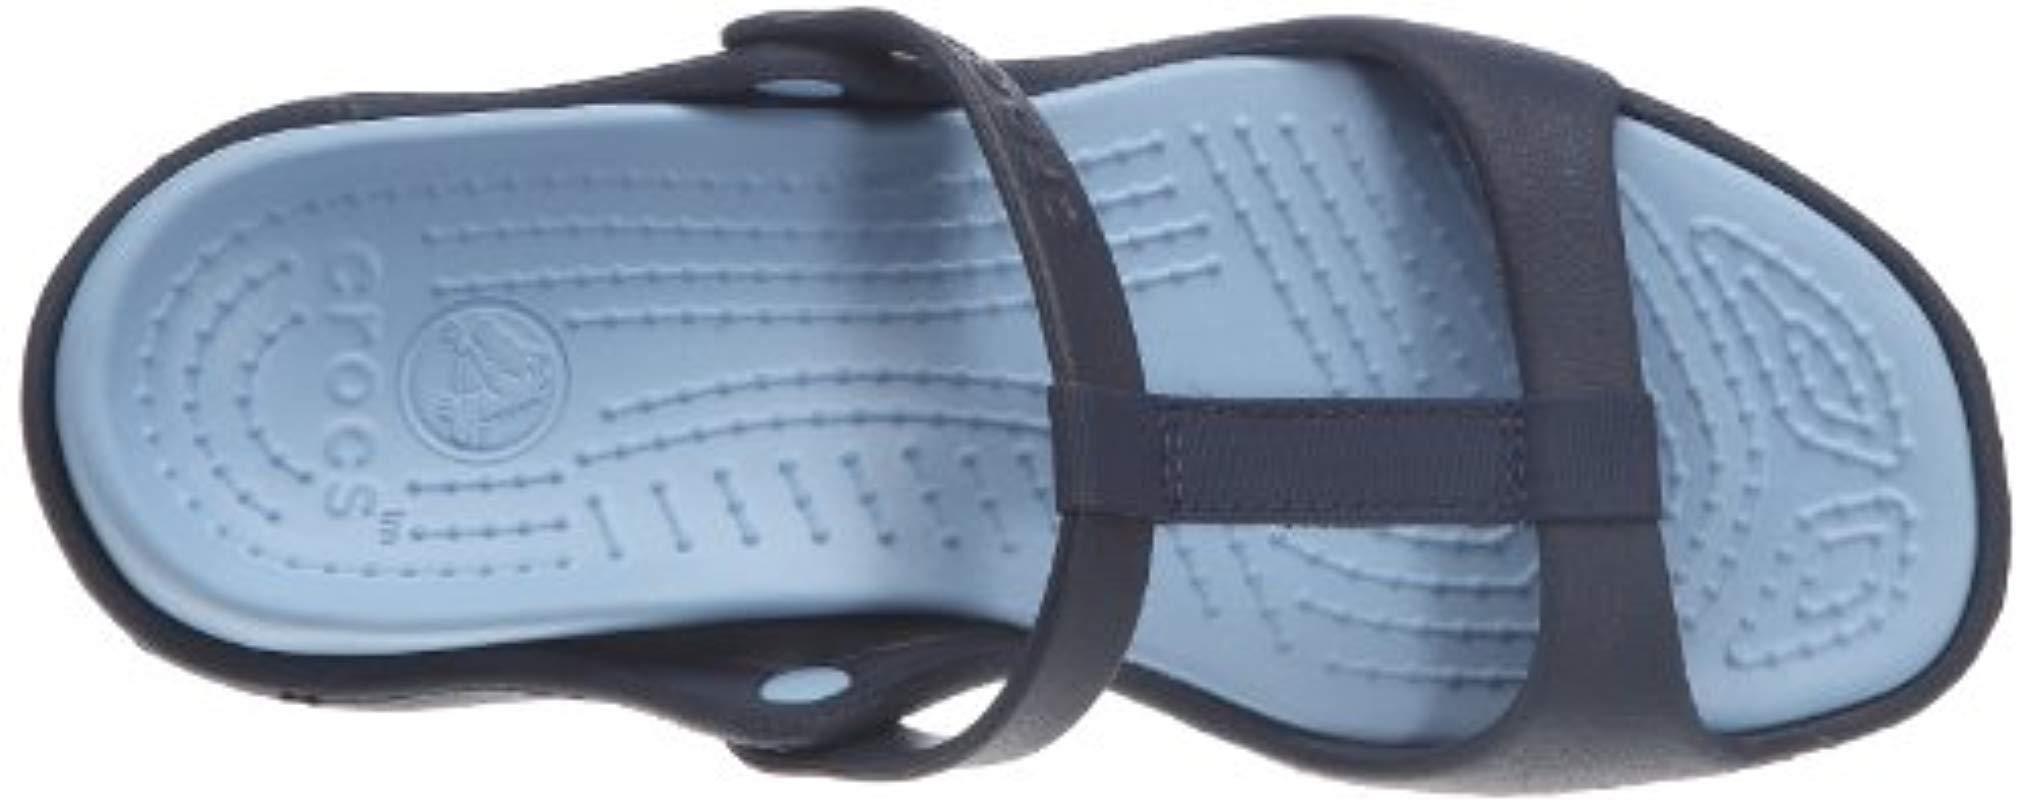 Cleo III , Sandalias para Mujer Crocs™ de color Azul | Lyst